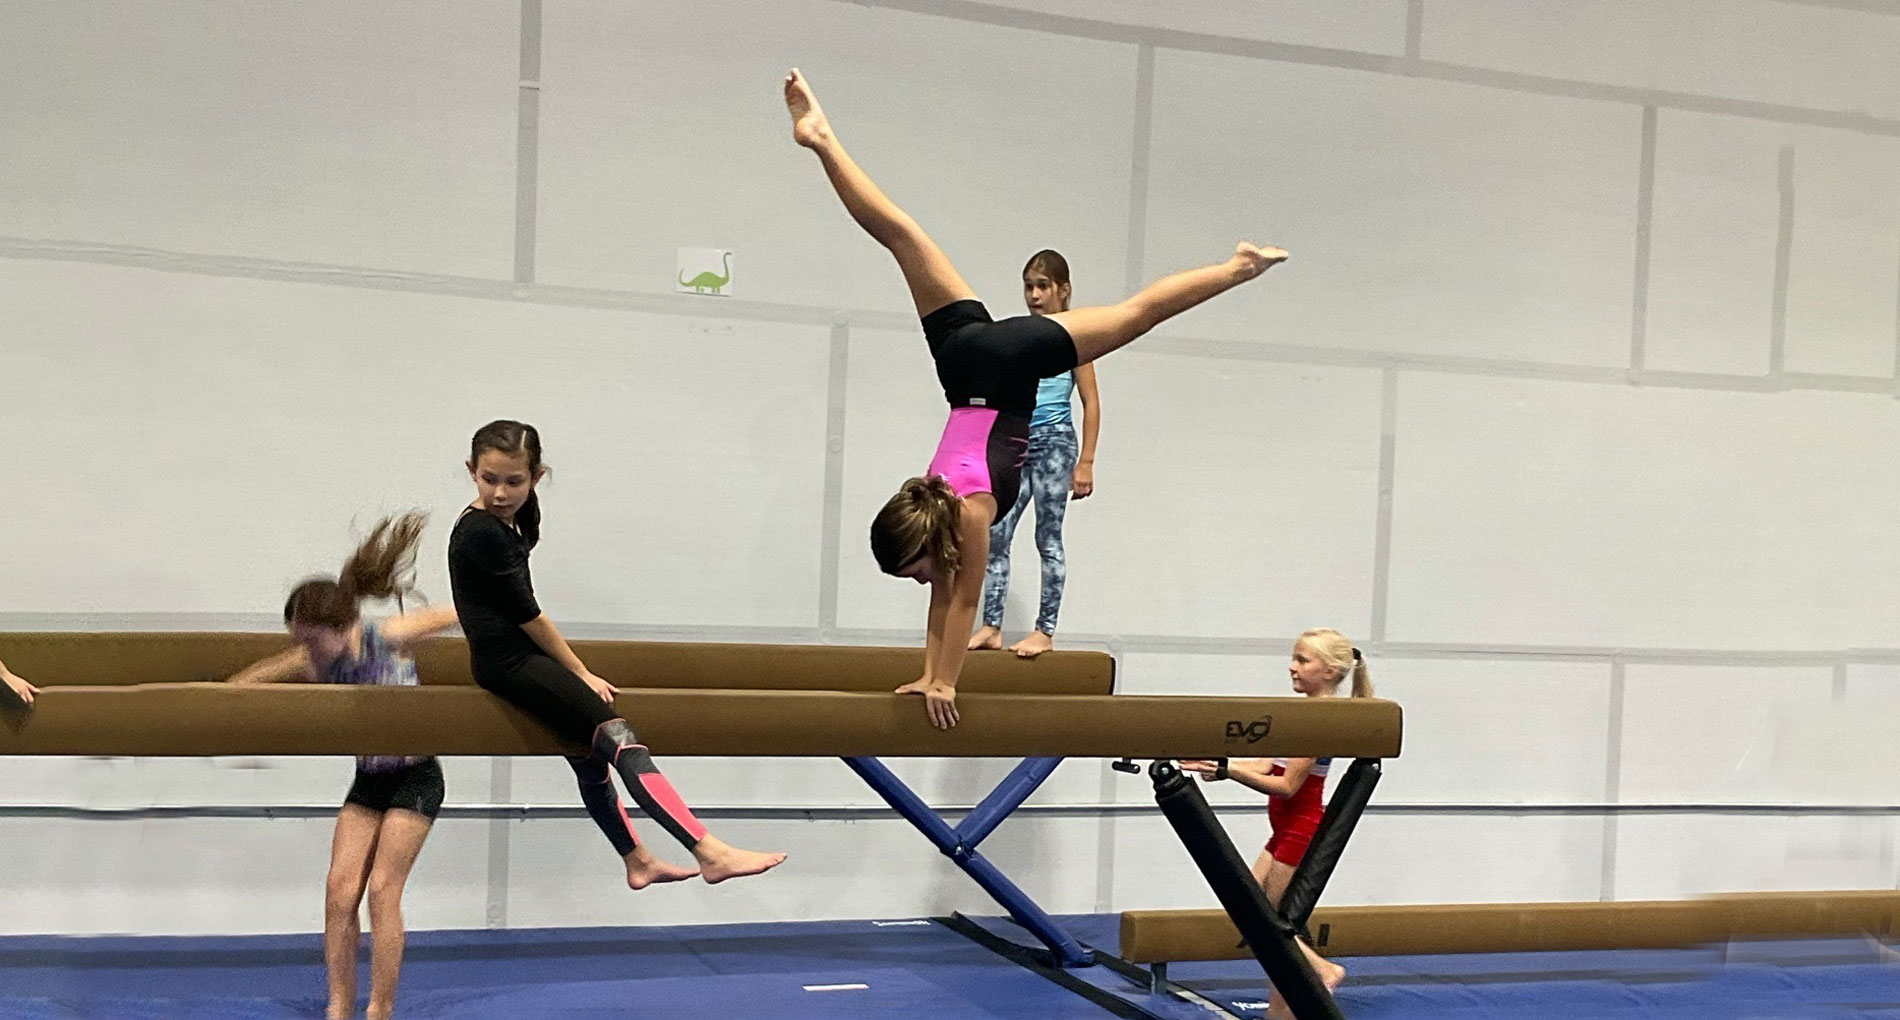 Girls Recreational Gymnastics